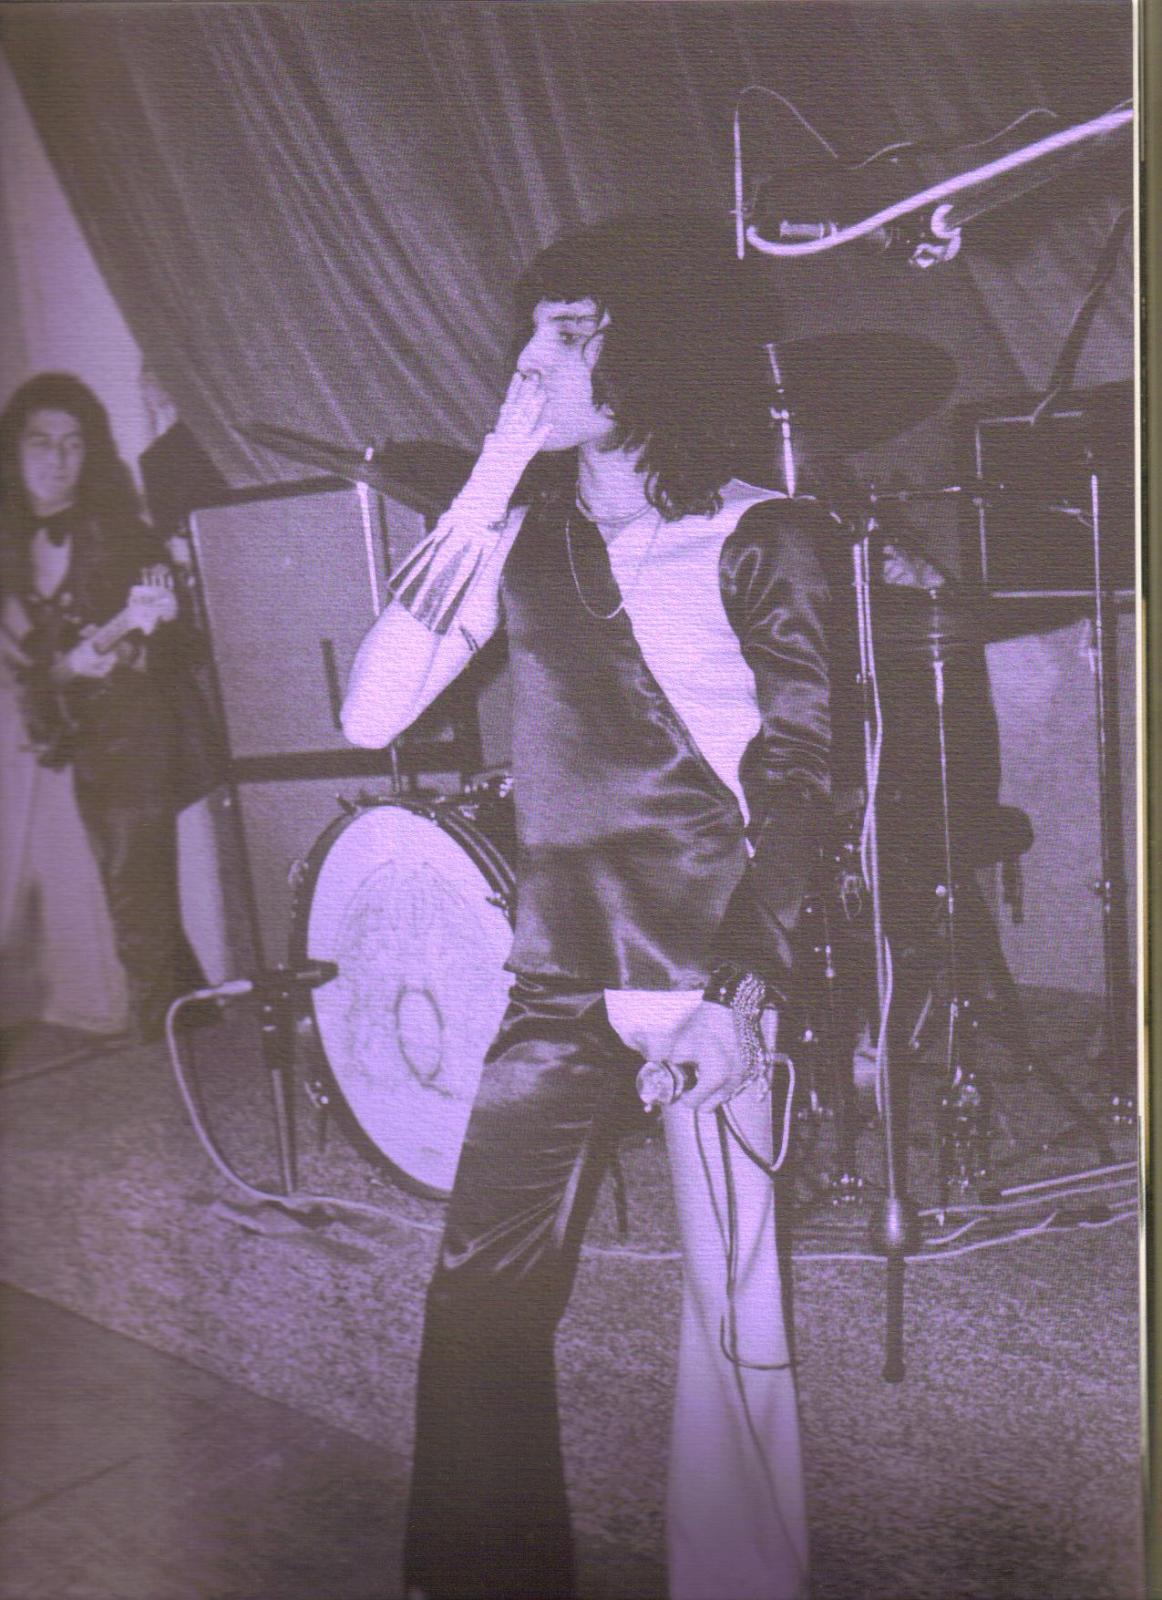 Freddie Mercury 1971